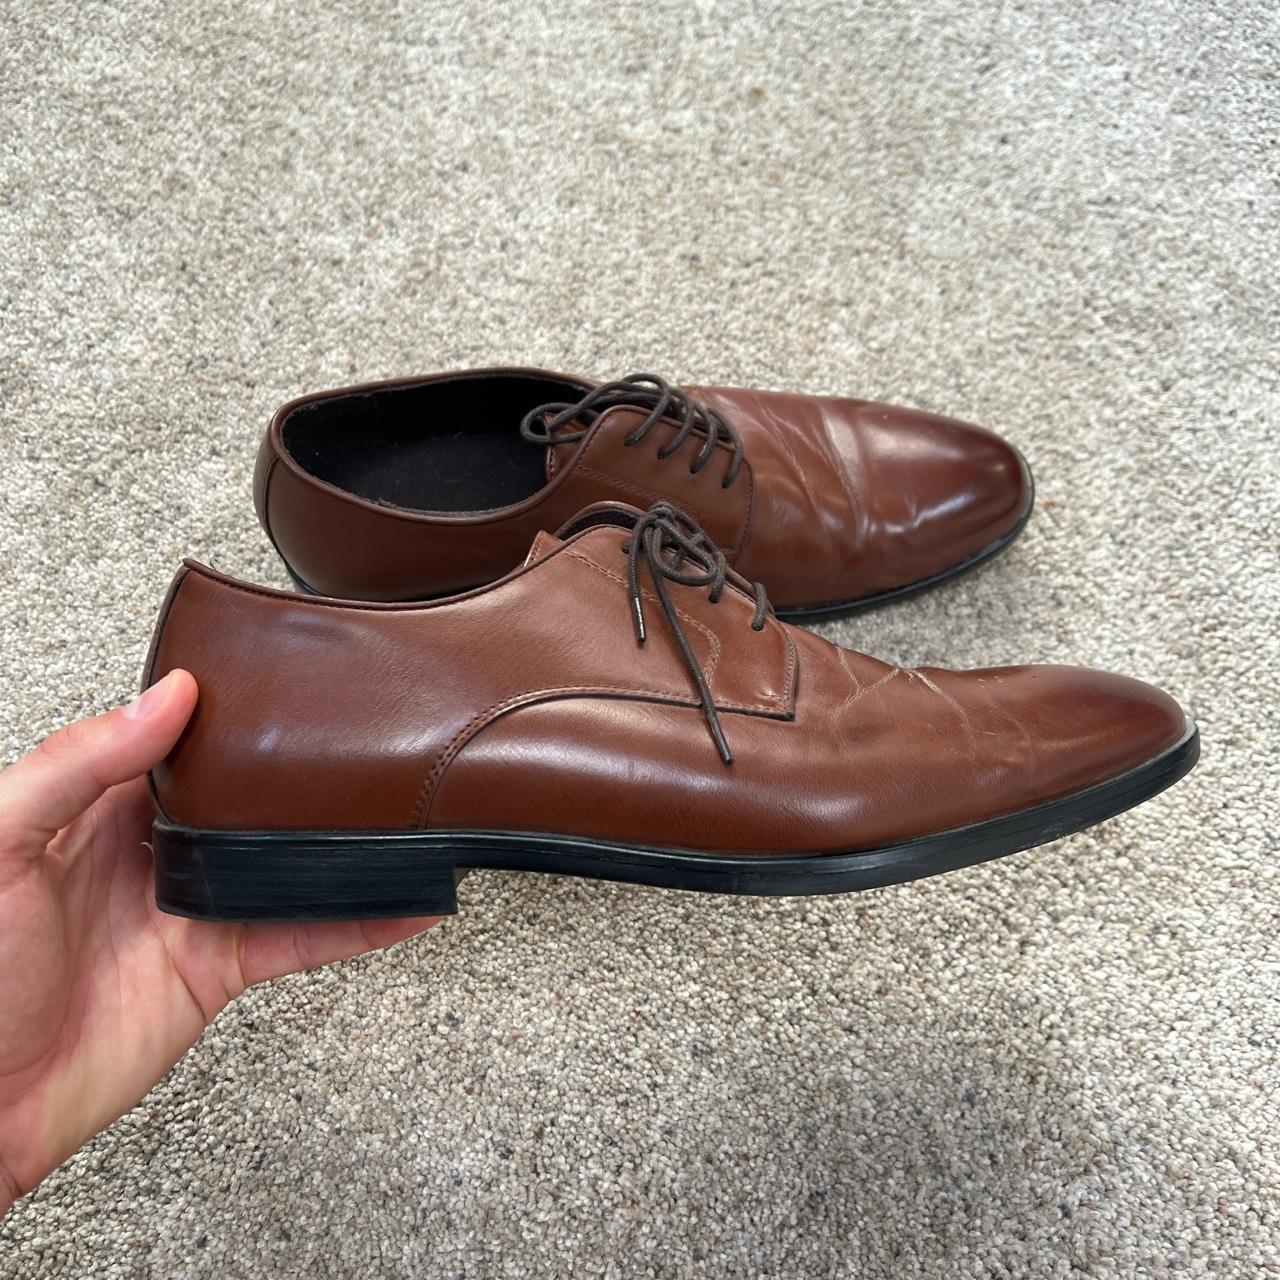 Men’s brown leather dress shoes - Size 11 - Depop